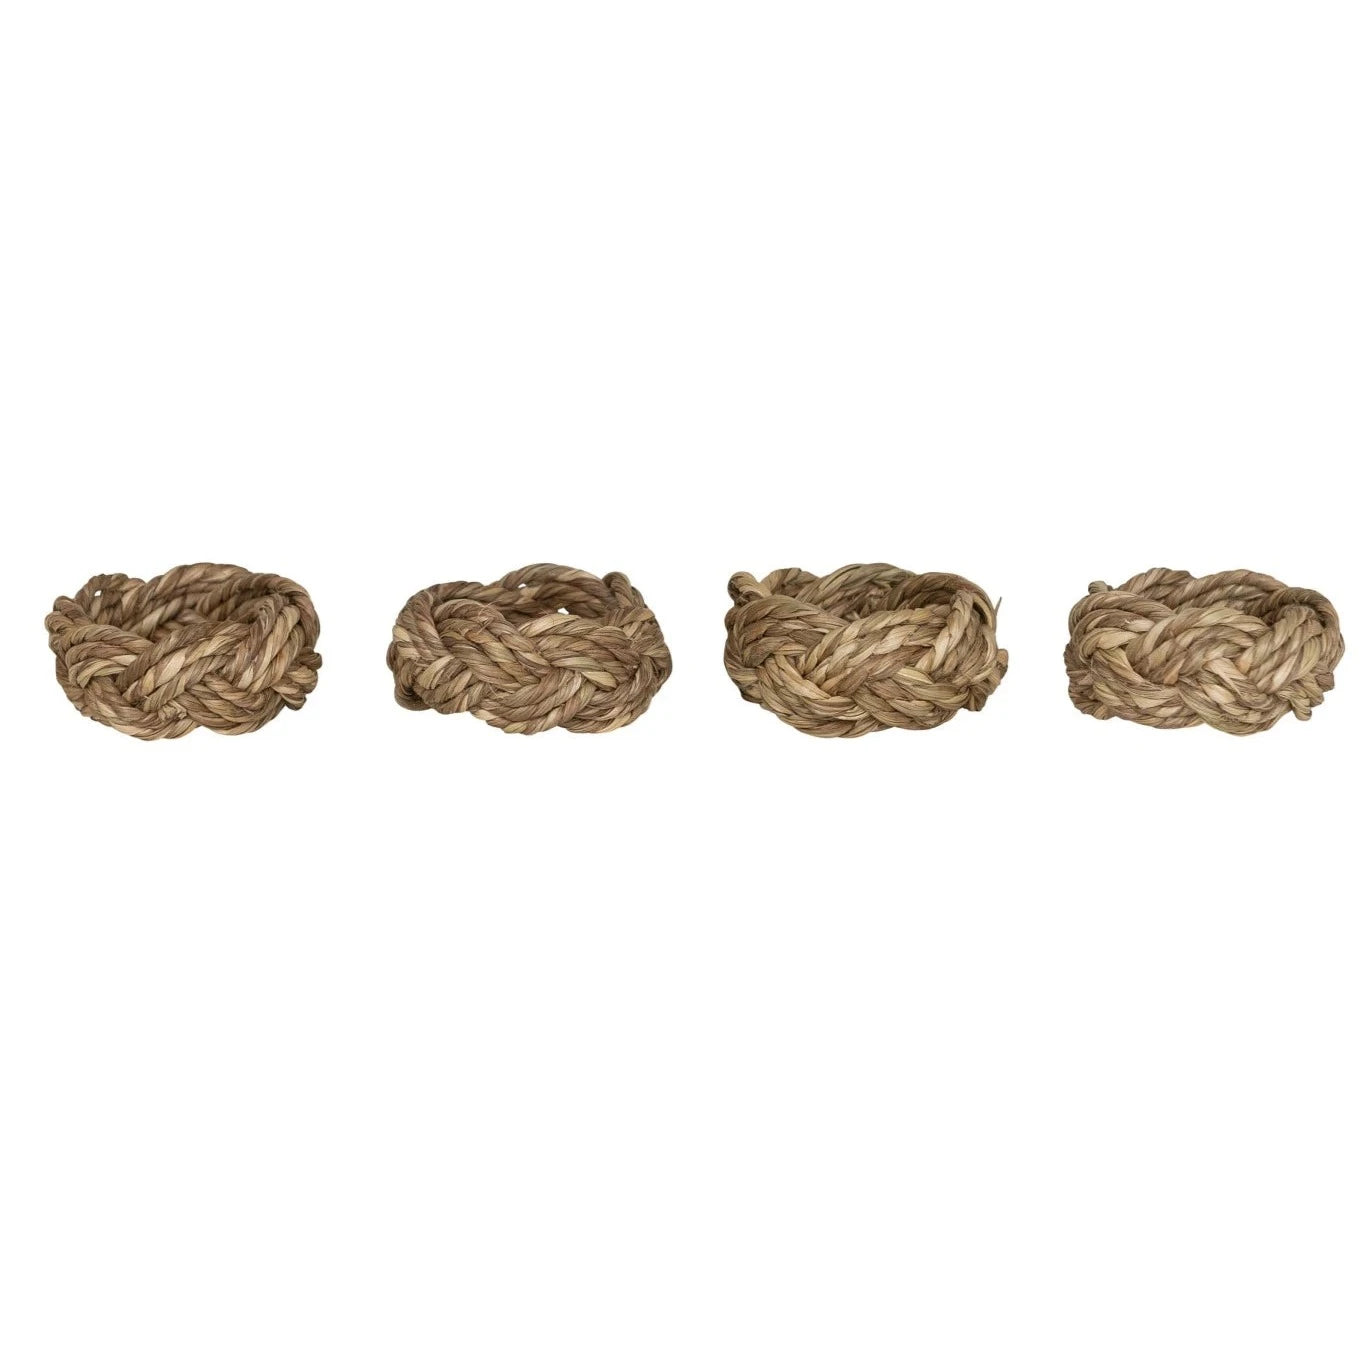 Braided Seagrass Napkin Ring Set